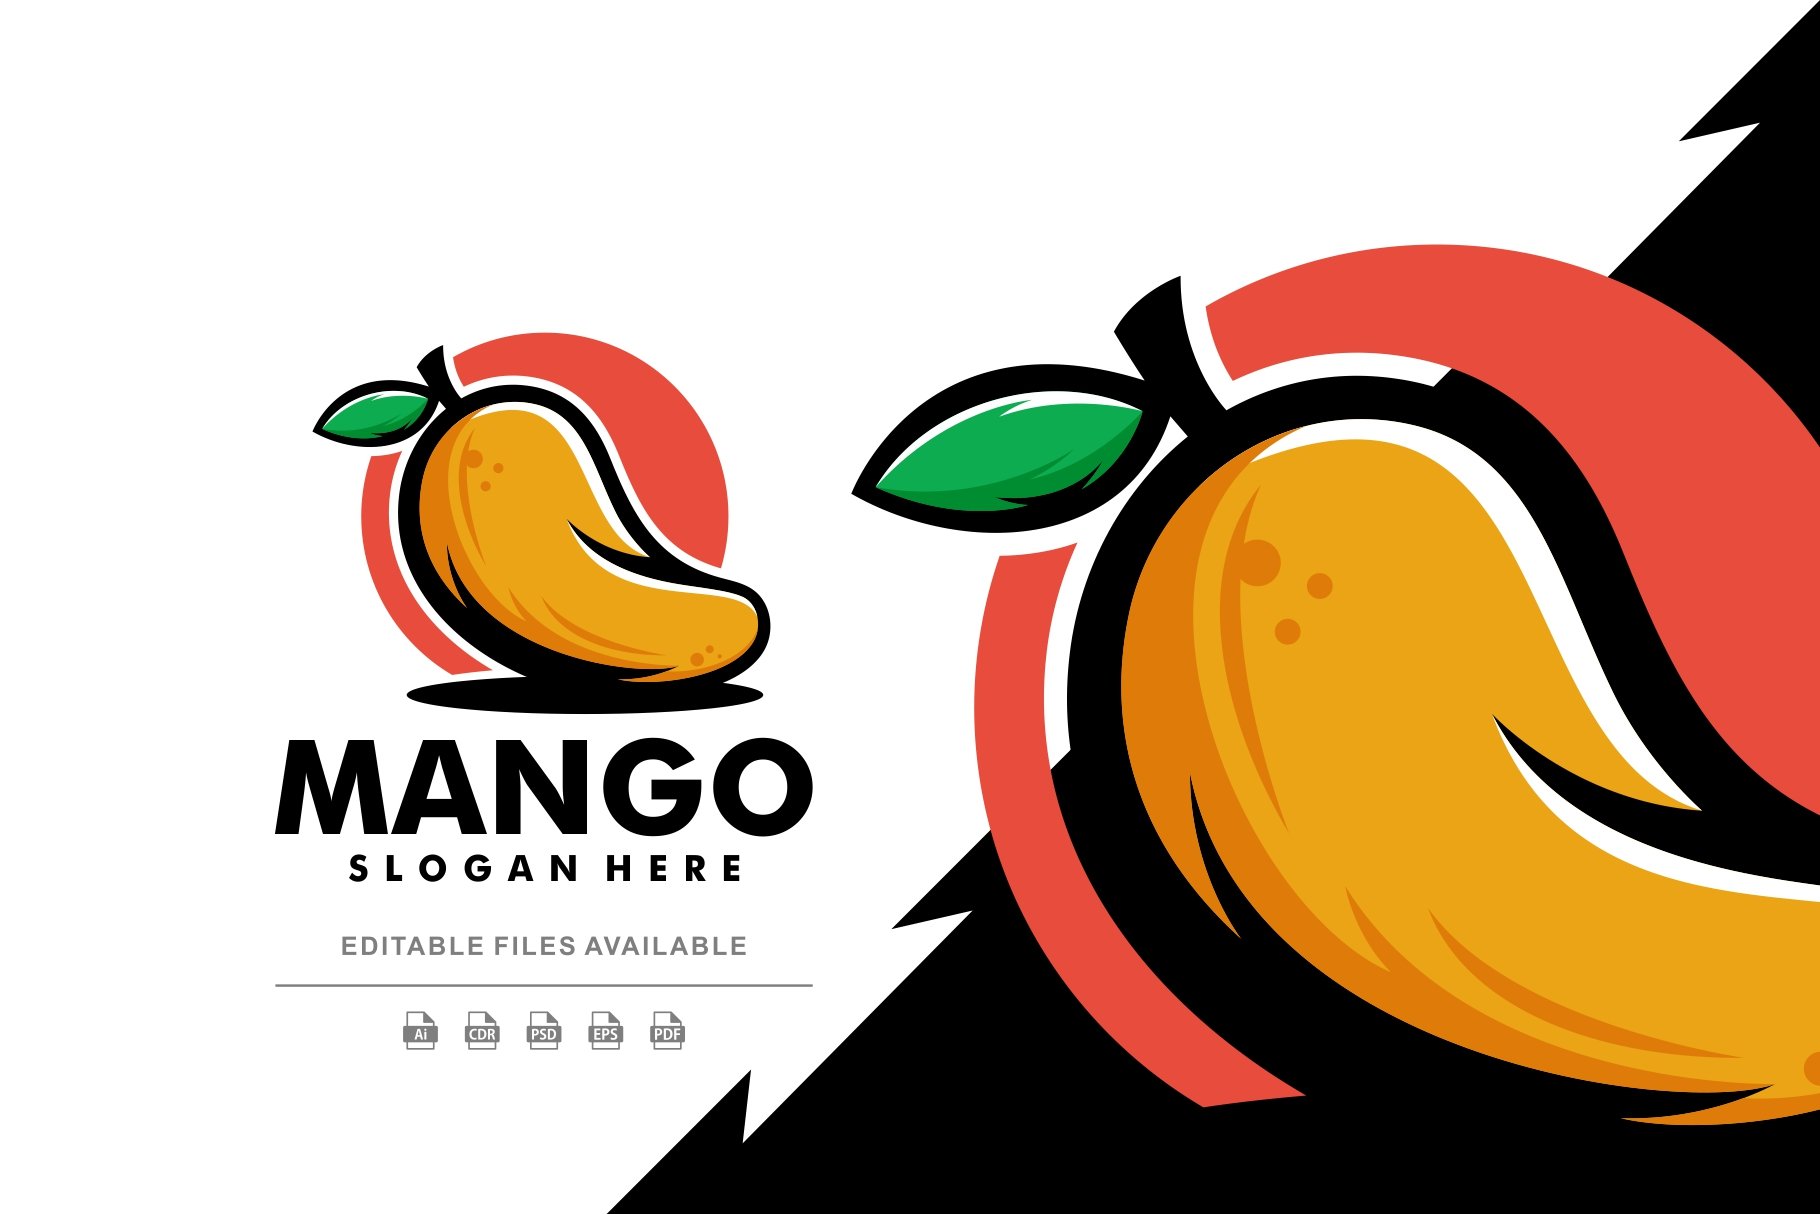 Mango Simple Mascot Logo cover image.